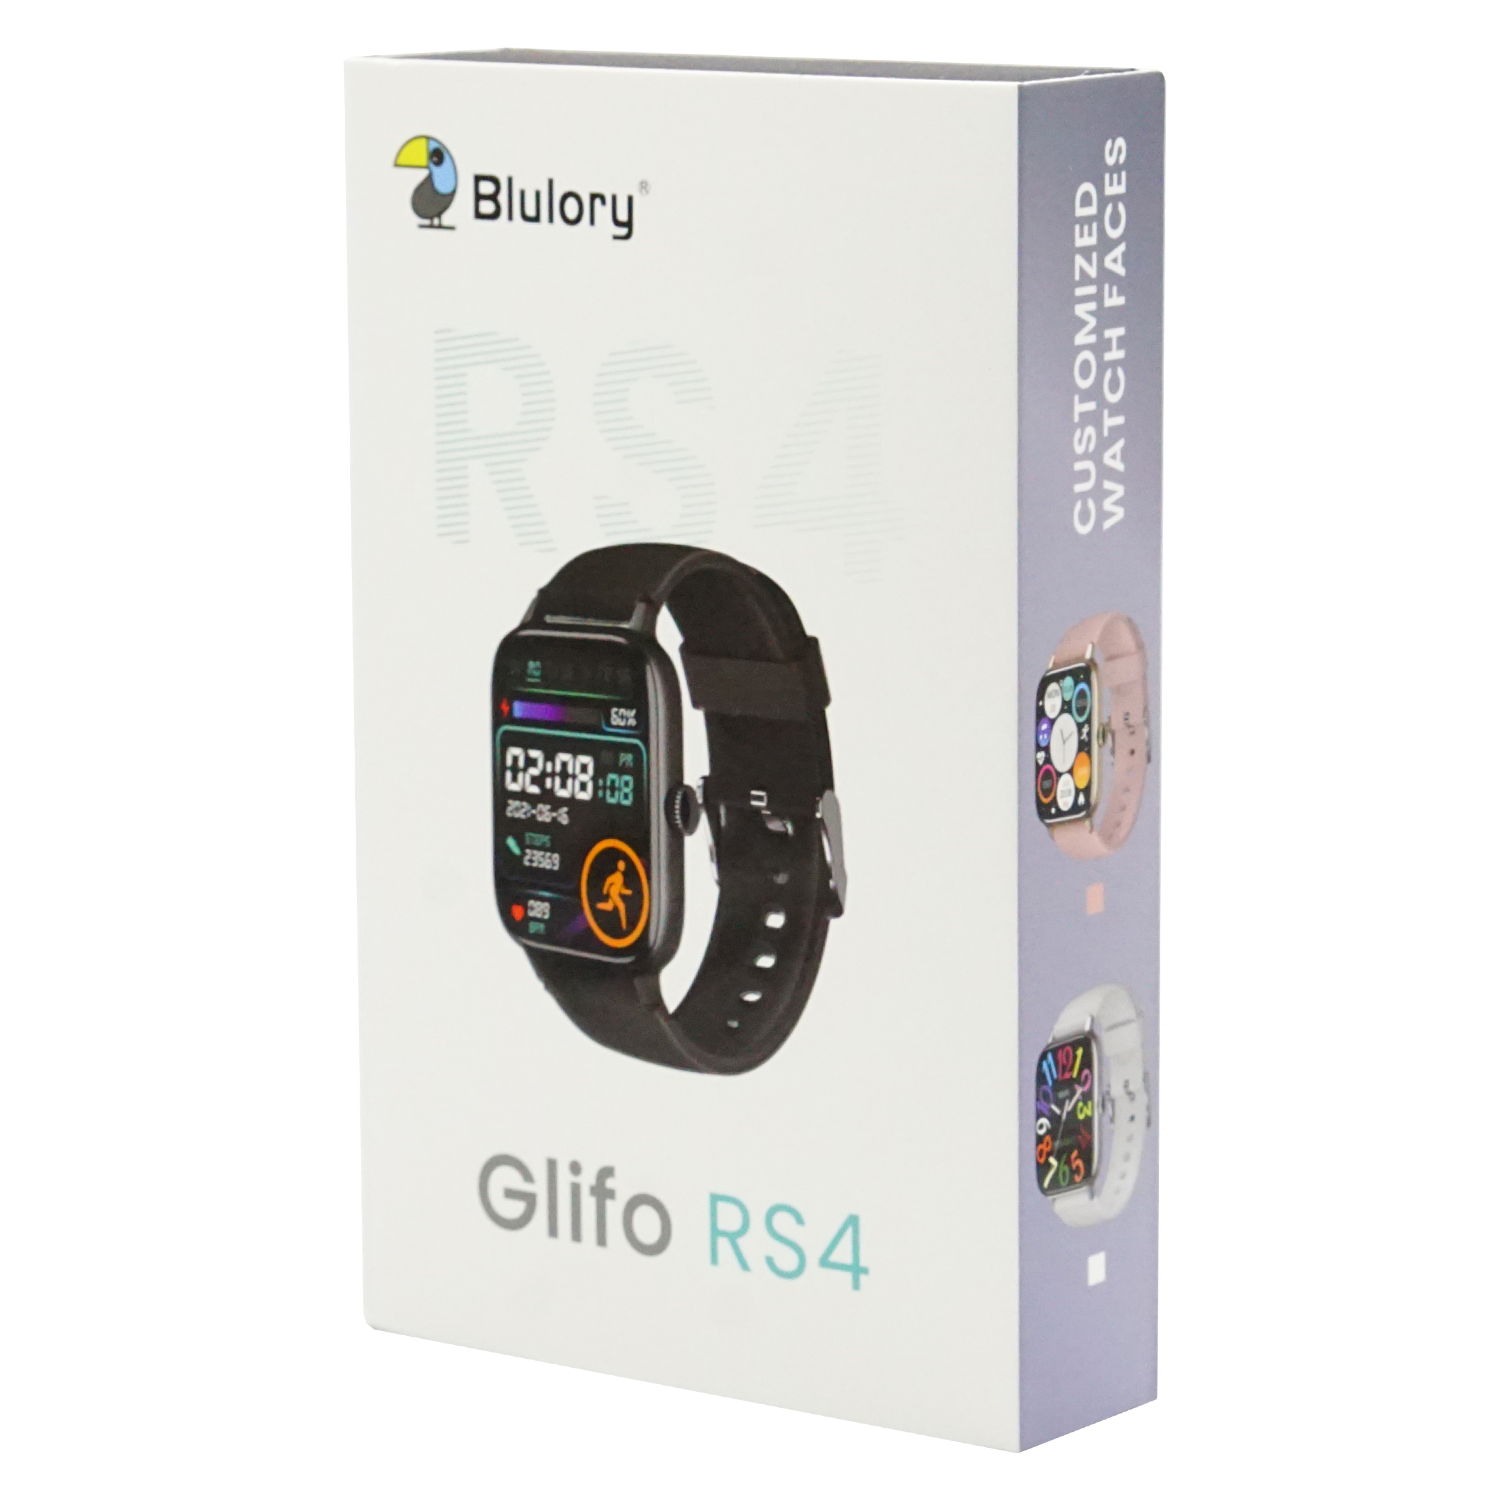 Smartwatch Blulory Glifo RS4 45mm - Preto